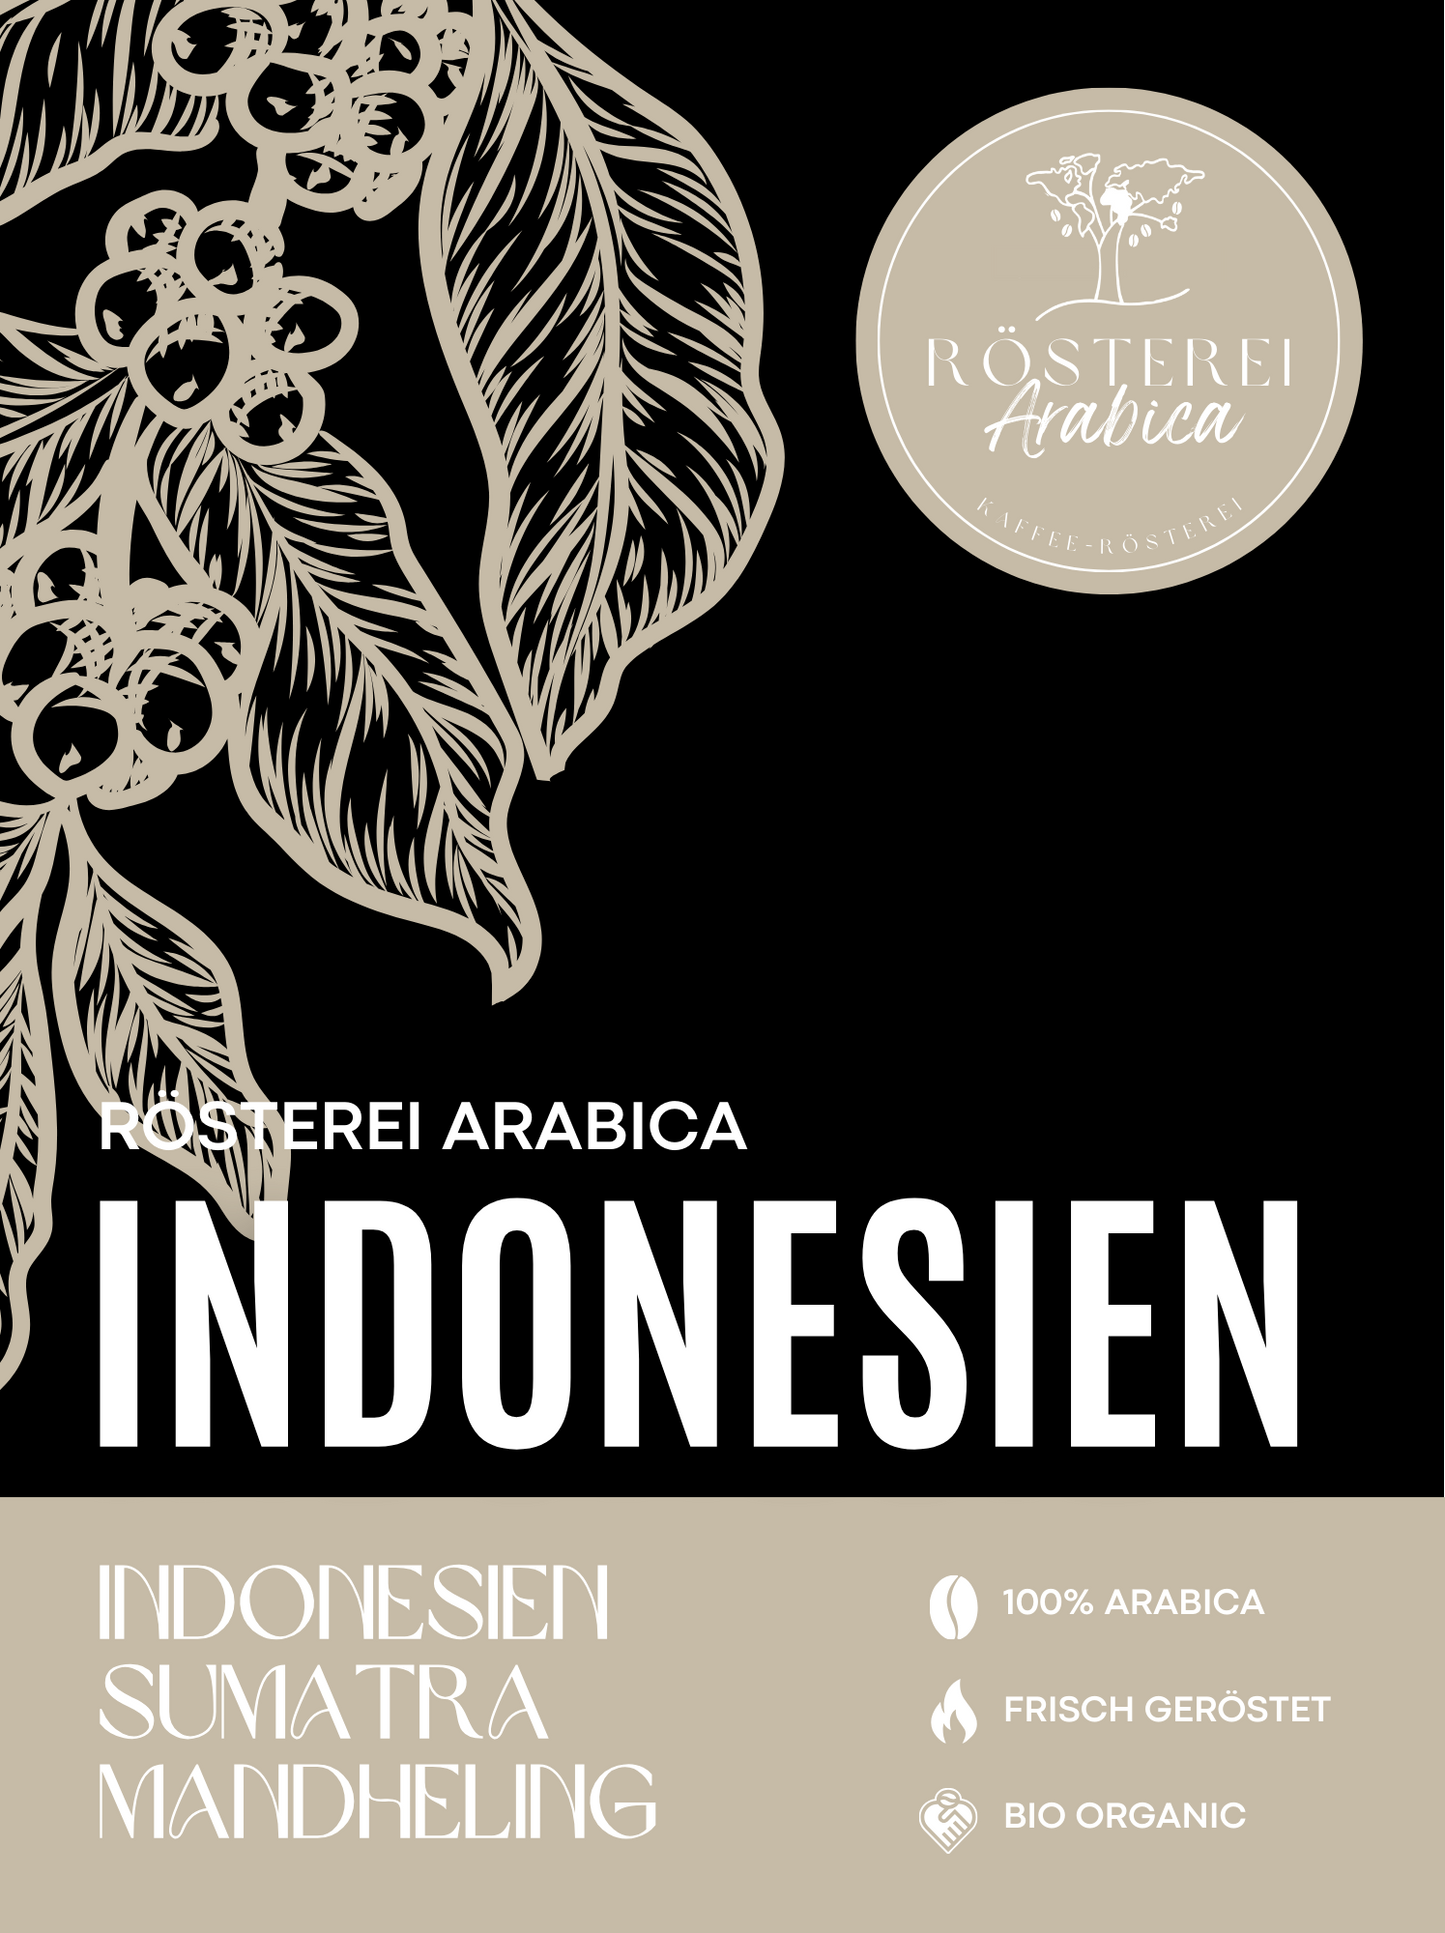 Bio Espresso Indonesien